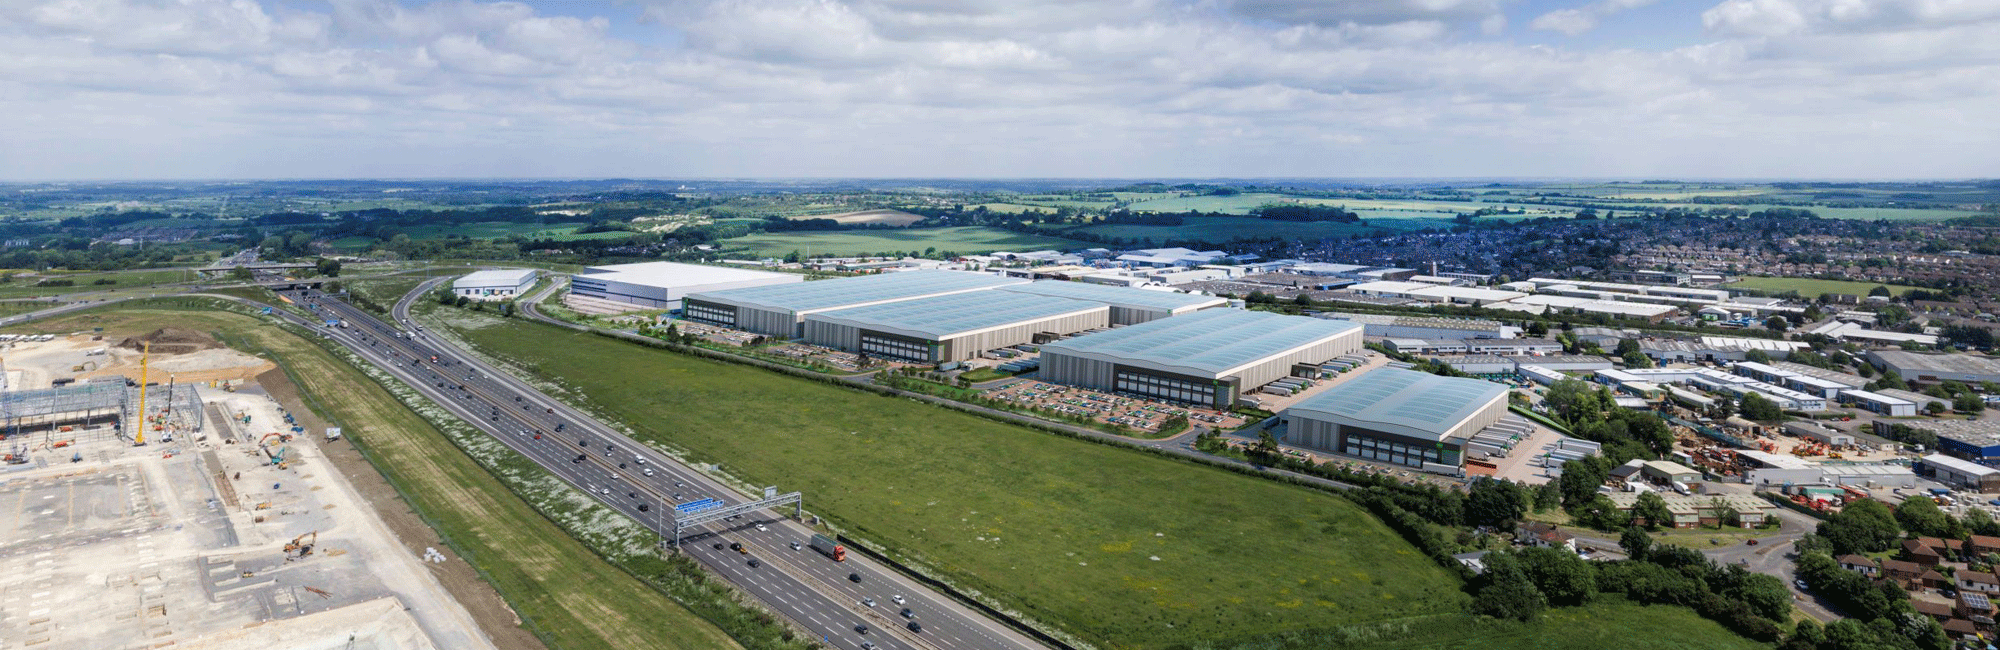 Aerial photo of Luton development site